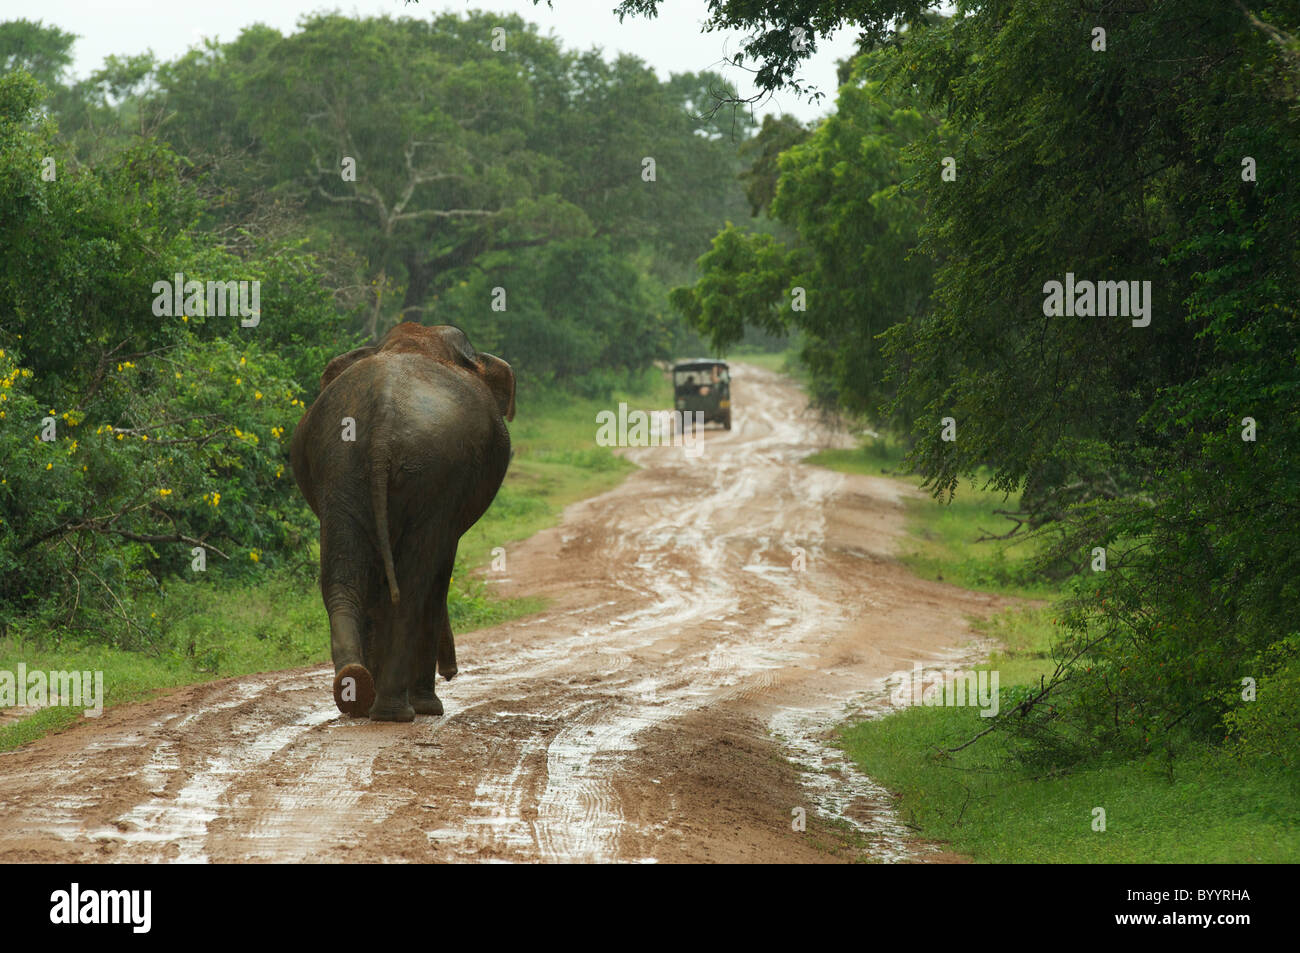 An Asian elephant  walking on a muddy road Yala National Park Sri Lanka Stock Photo